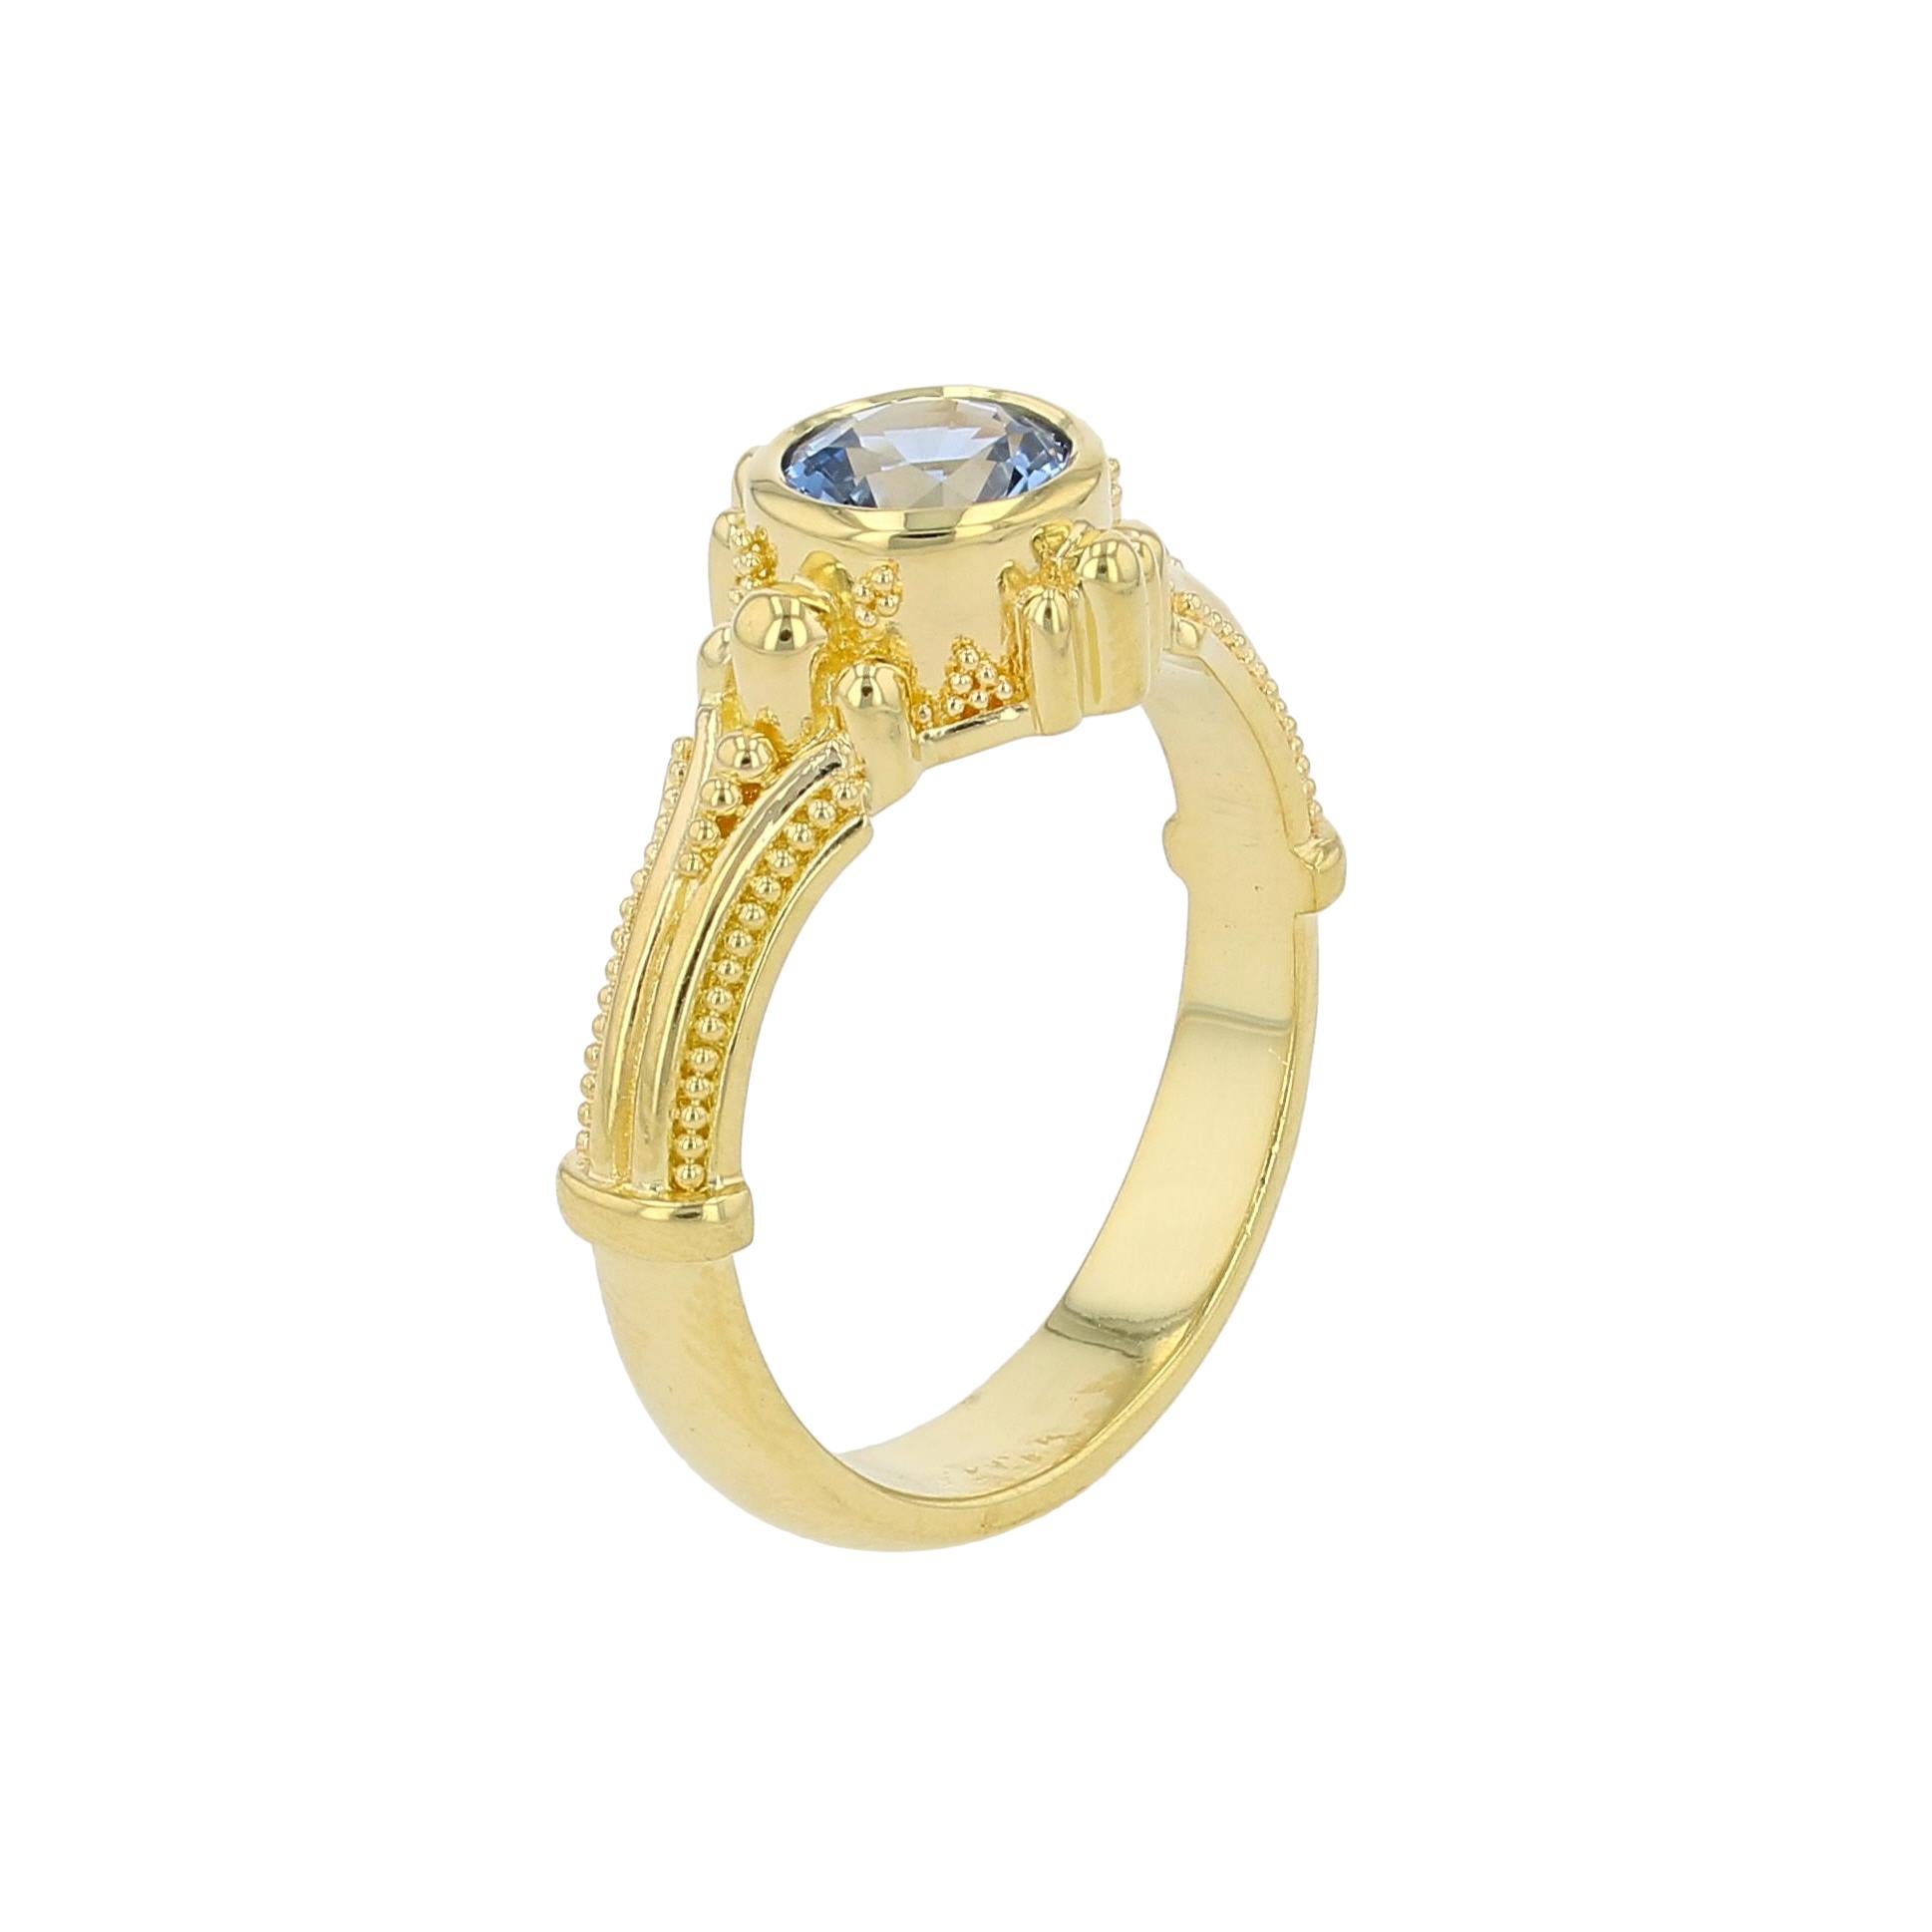 Kent Raible 18 Karat Gold Solitare Ring with Natural Blue Sapphire, Granulation 5